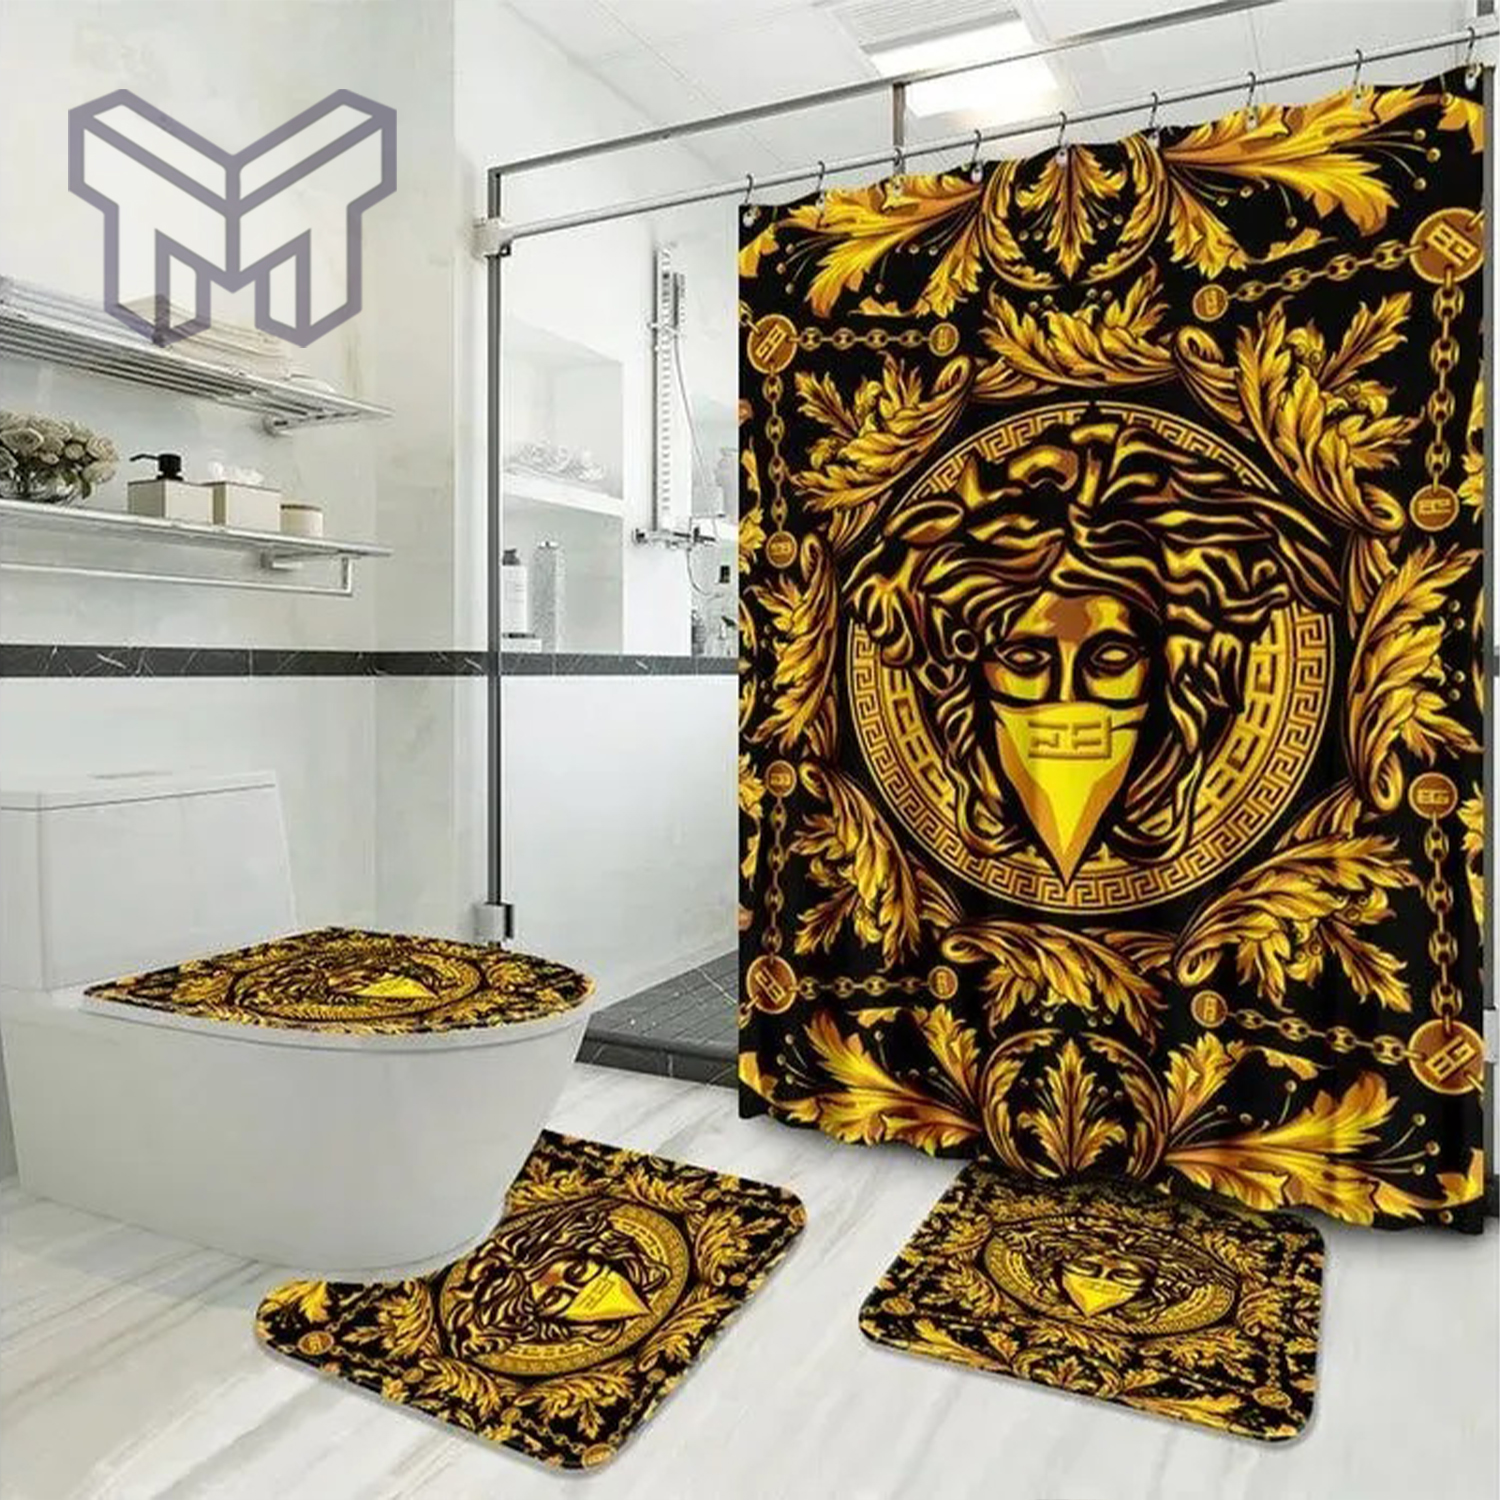 Gucci Premium Fashion Luxury Brand Bathroom Set Home Decor Shower Curtain  And Rug Toilet Seat Lid Covers Bathroom Set - Muranotex Store